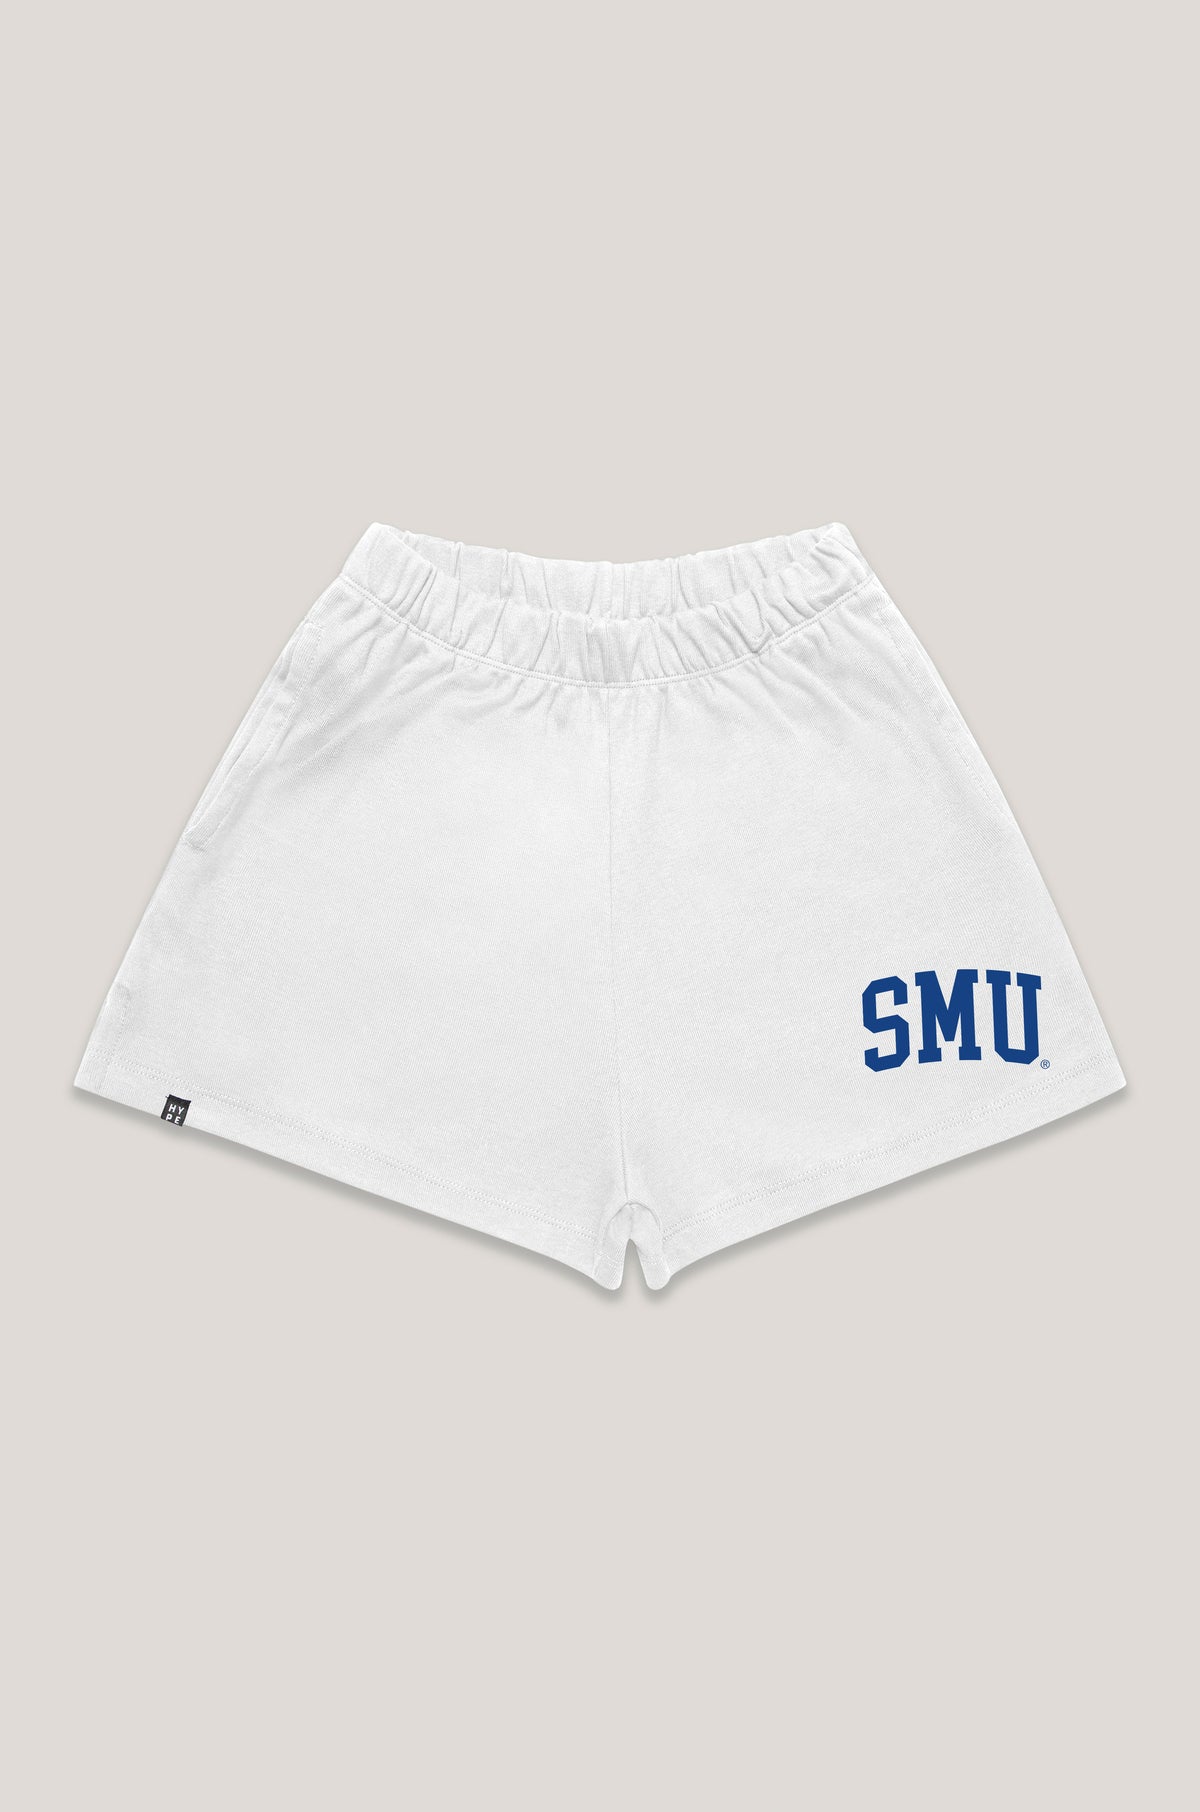 SMU Track Shorts